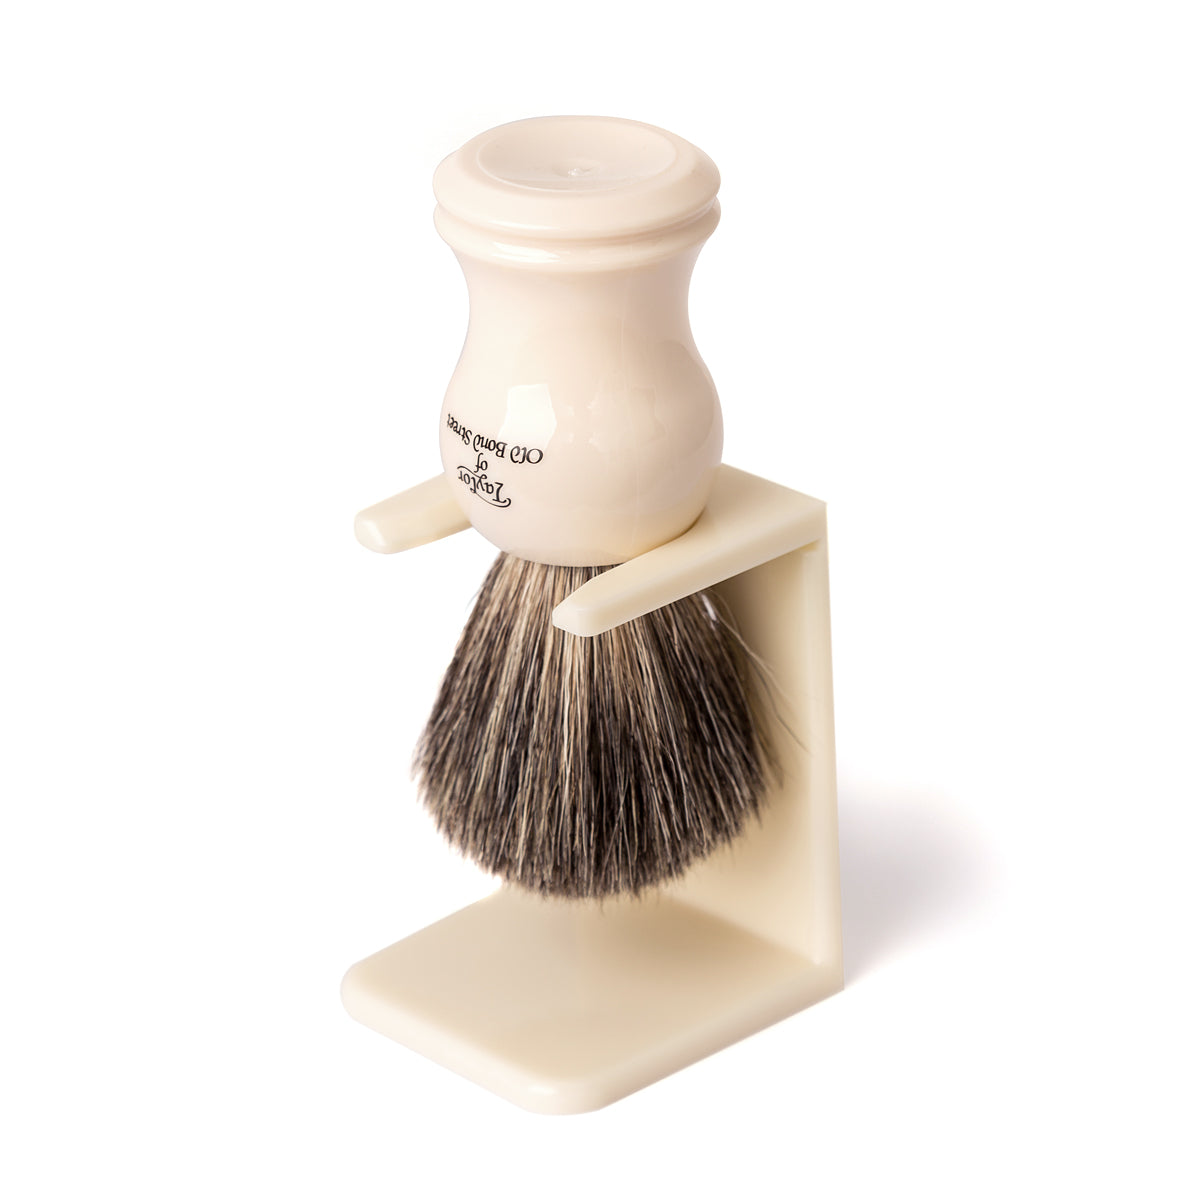 Imitation Ivory Shaving Brush Stand